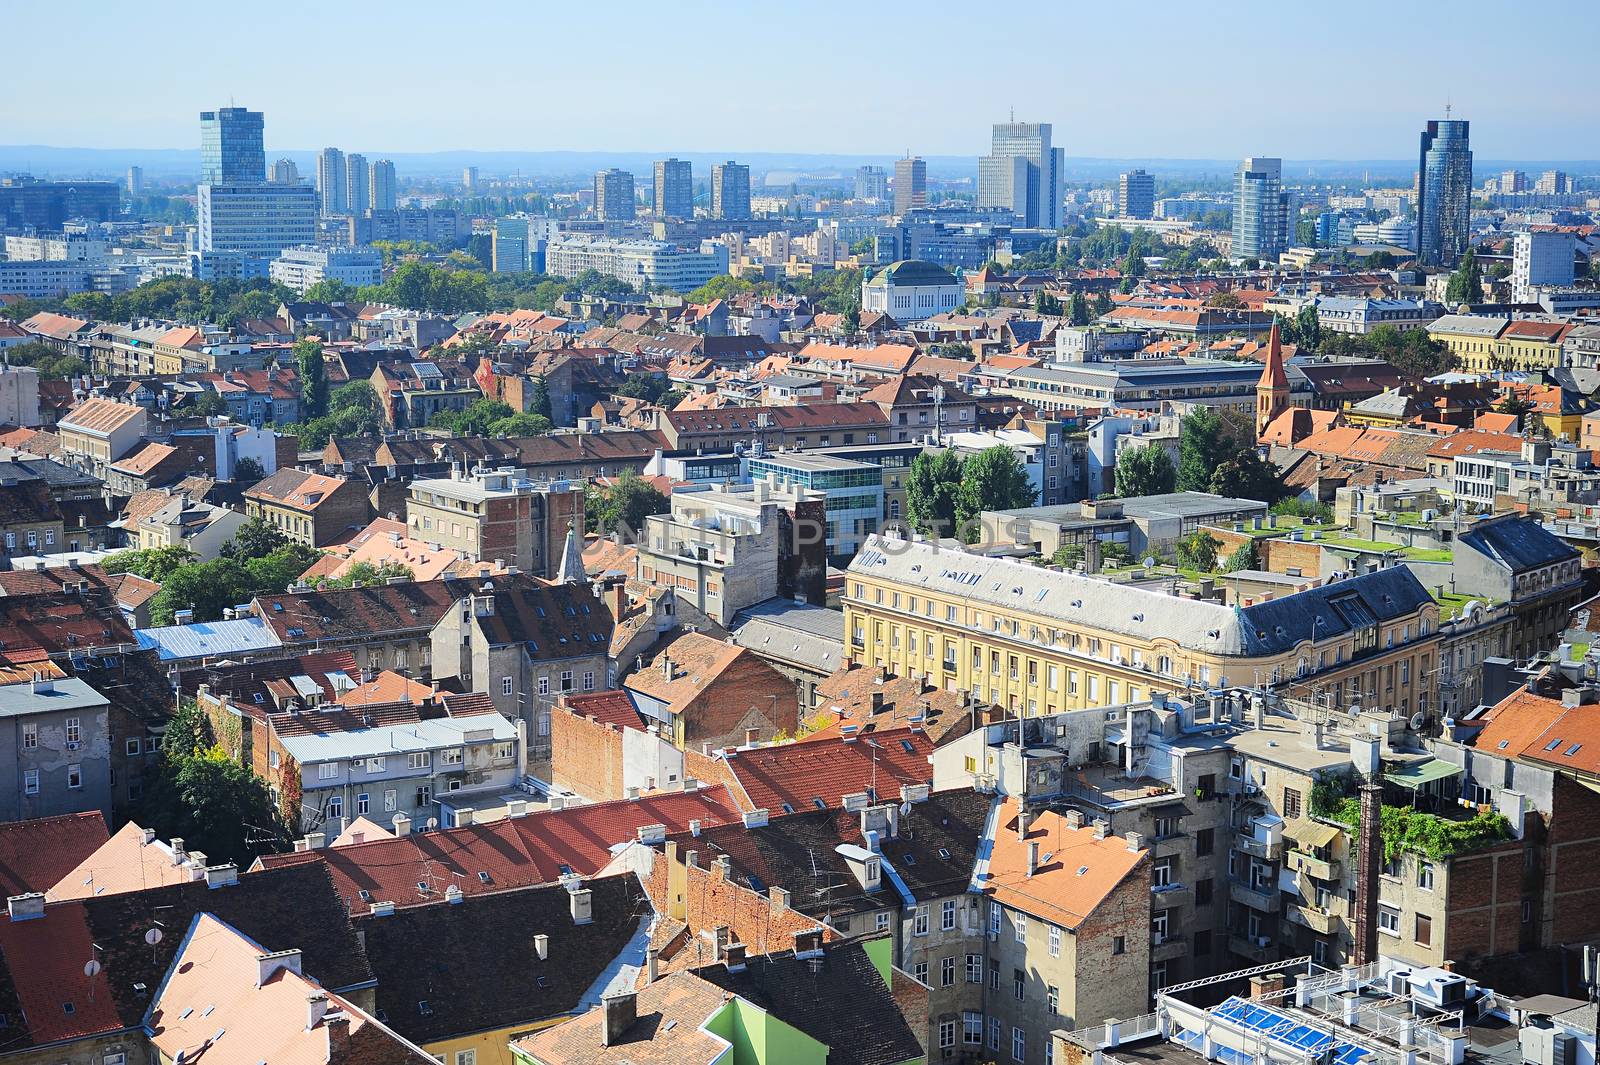 Aerial view of Zagreb, Croatia in bright sunny day